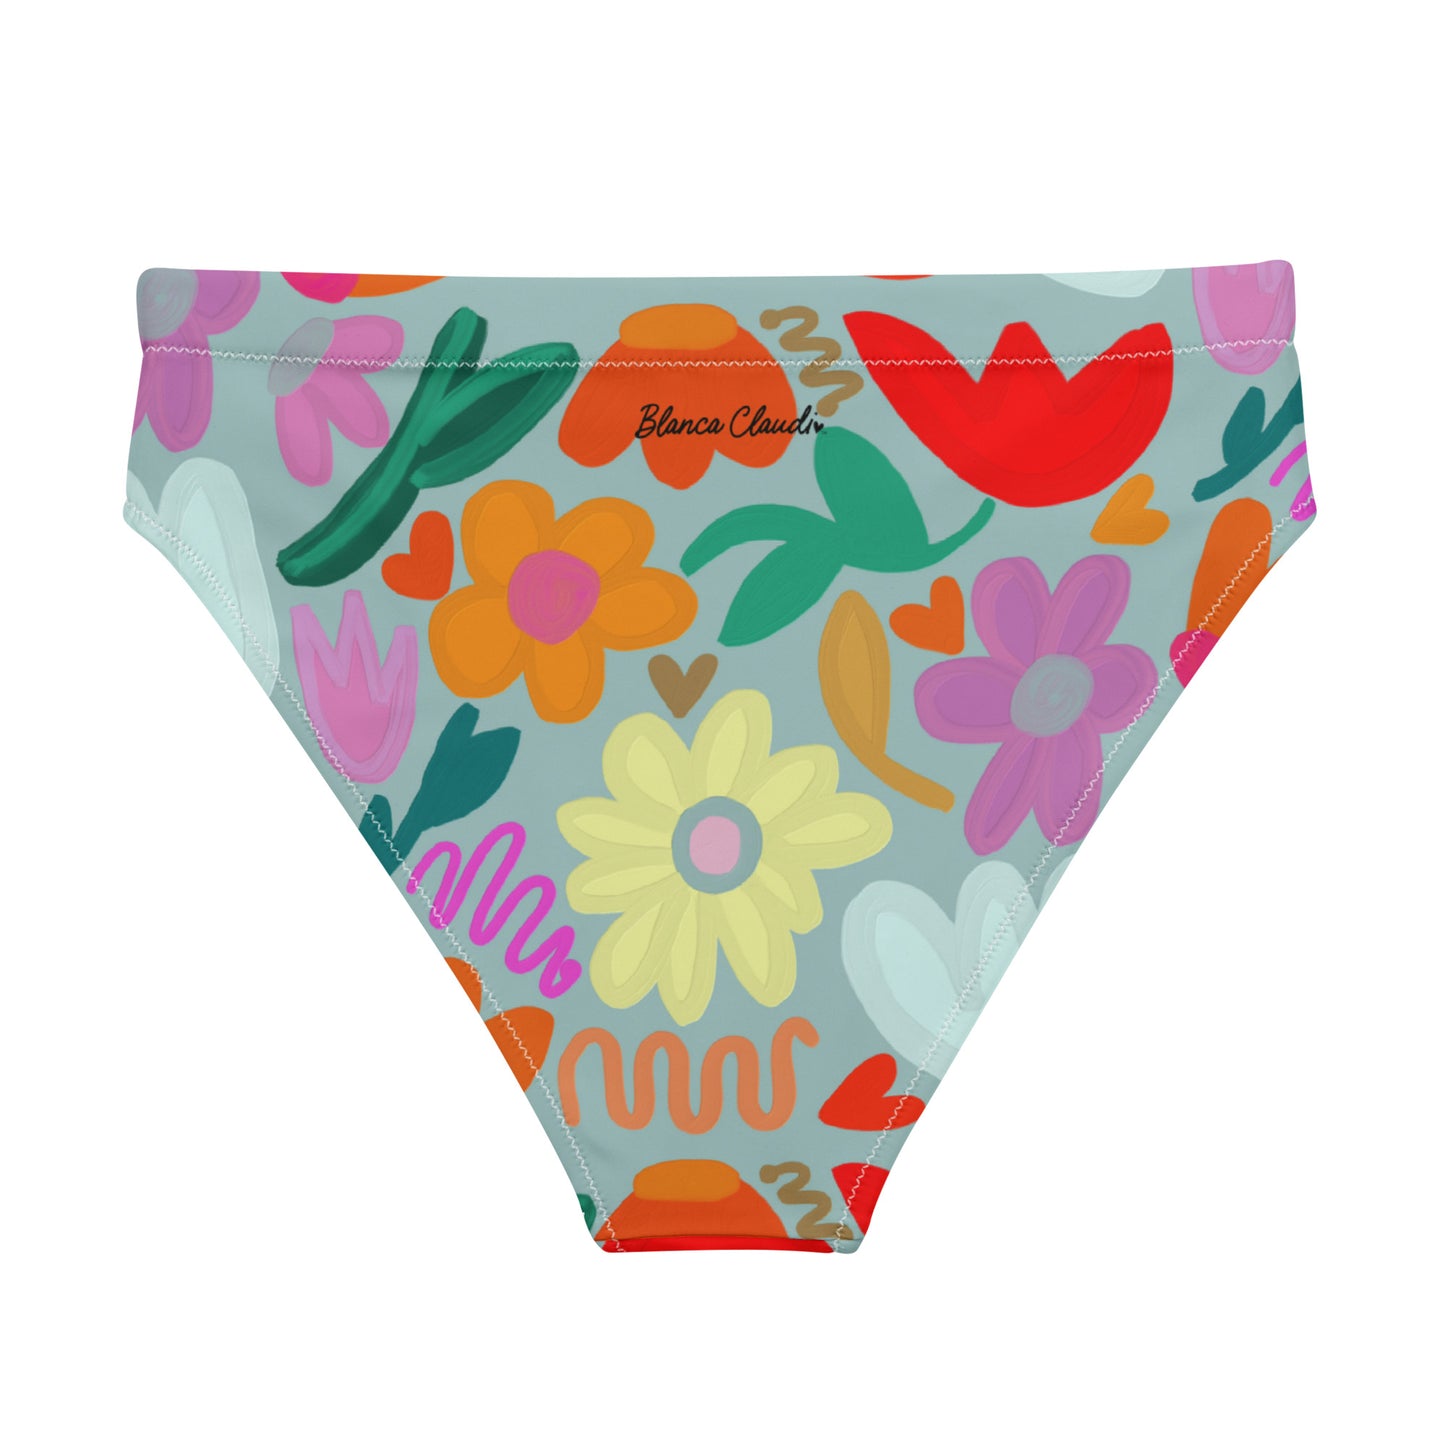 Spring 2 Recycled High-Waisted Bikini Bottom